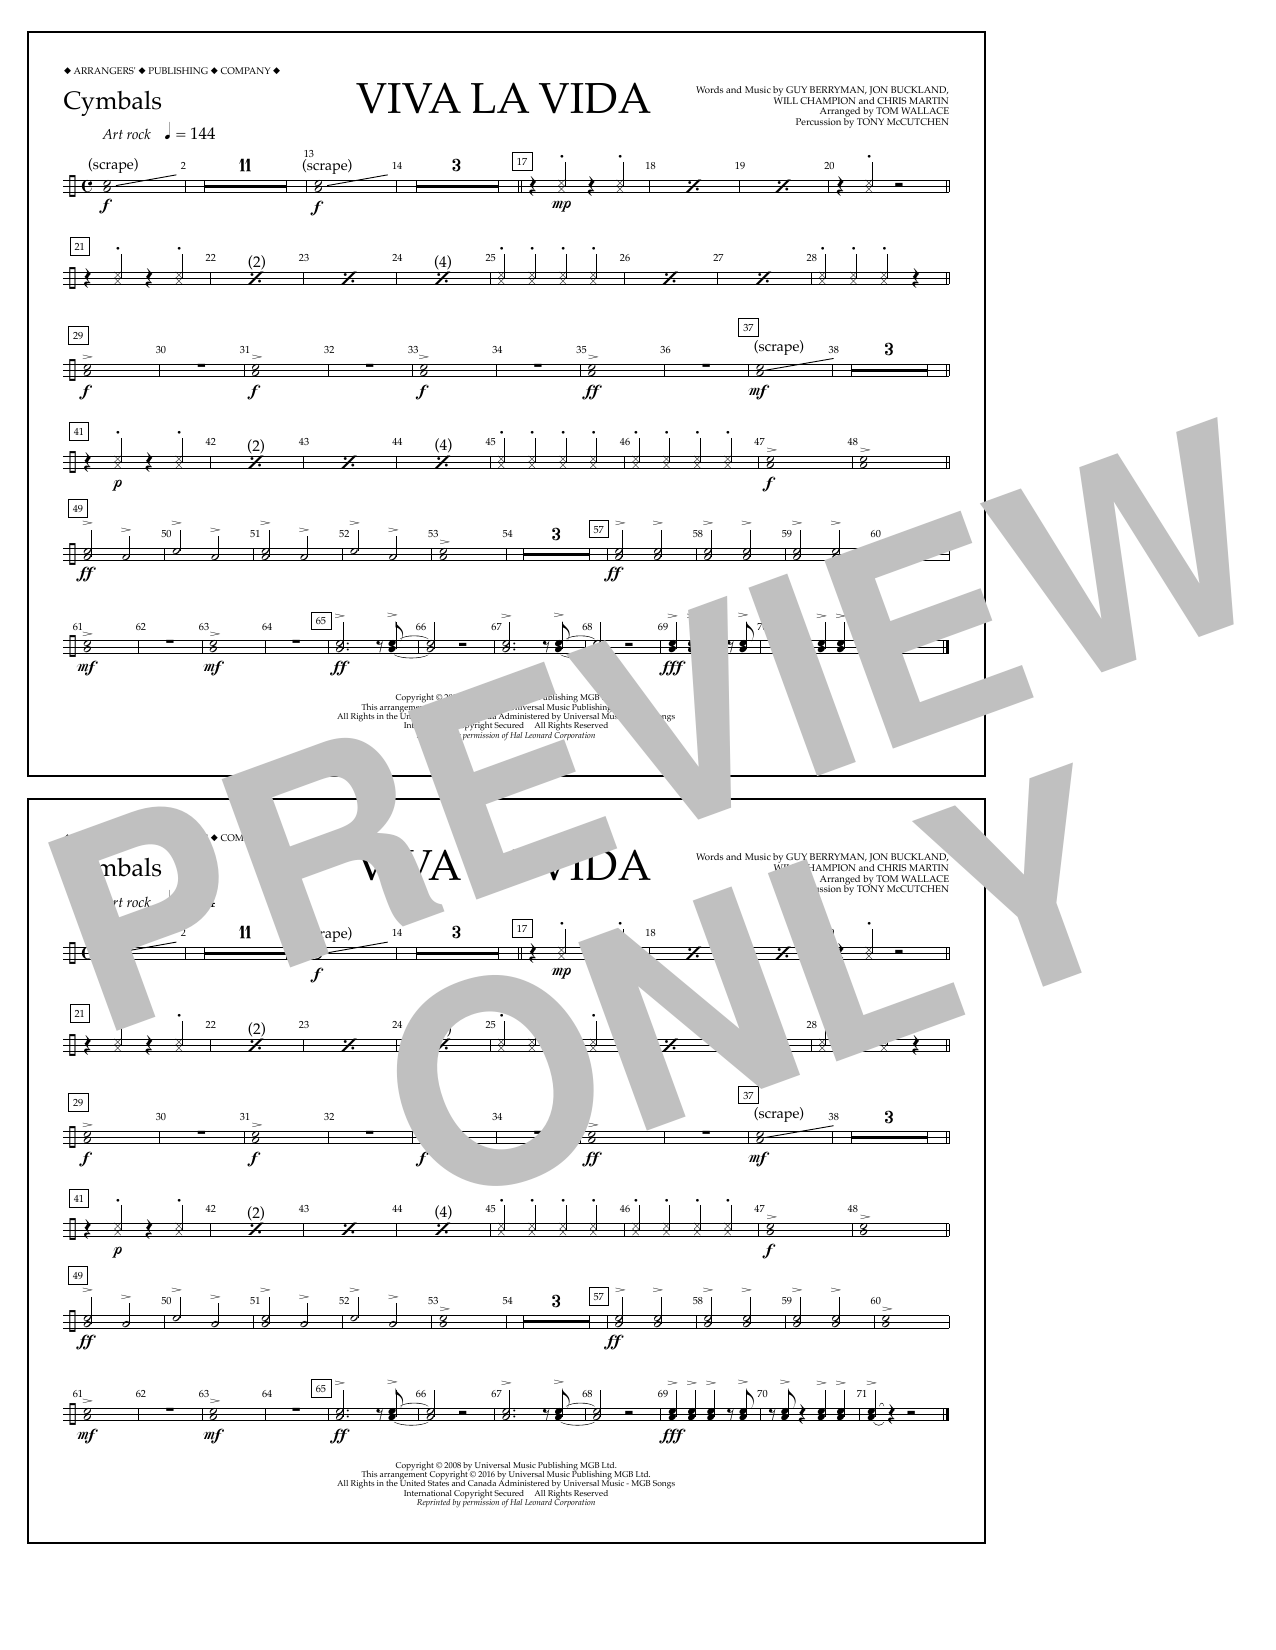 Tom Wallace Viva La Vida - Cymbals Sheet Music Notes & Chords for Marching Band - Download or Print PDF